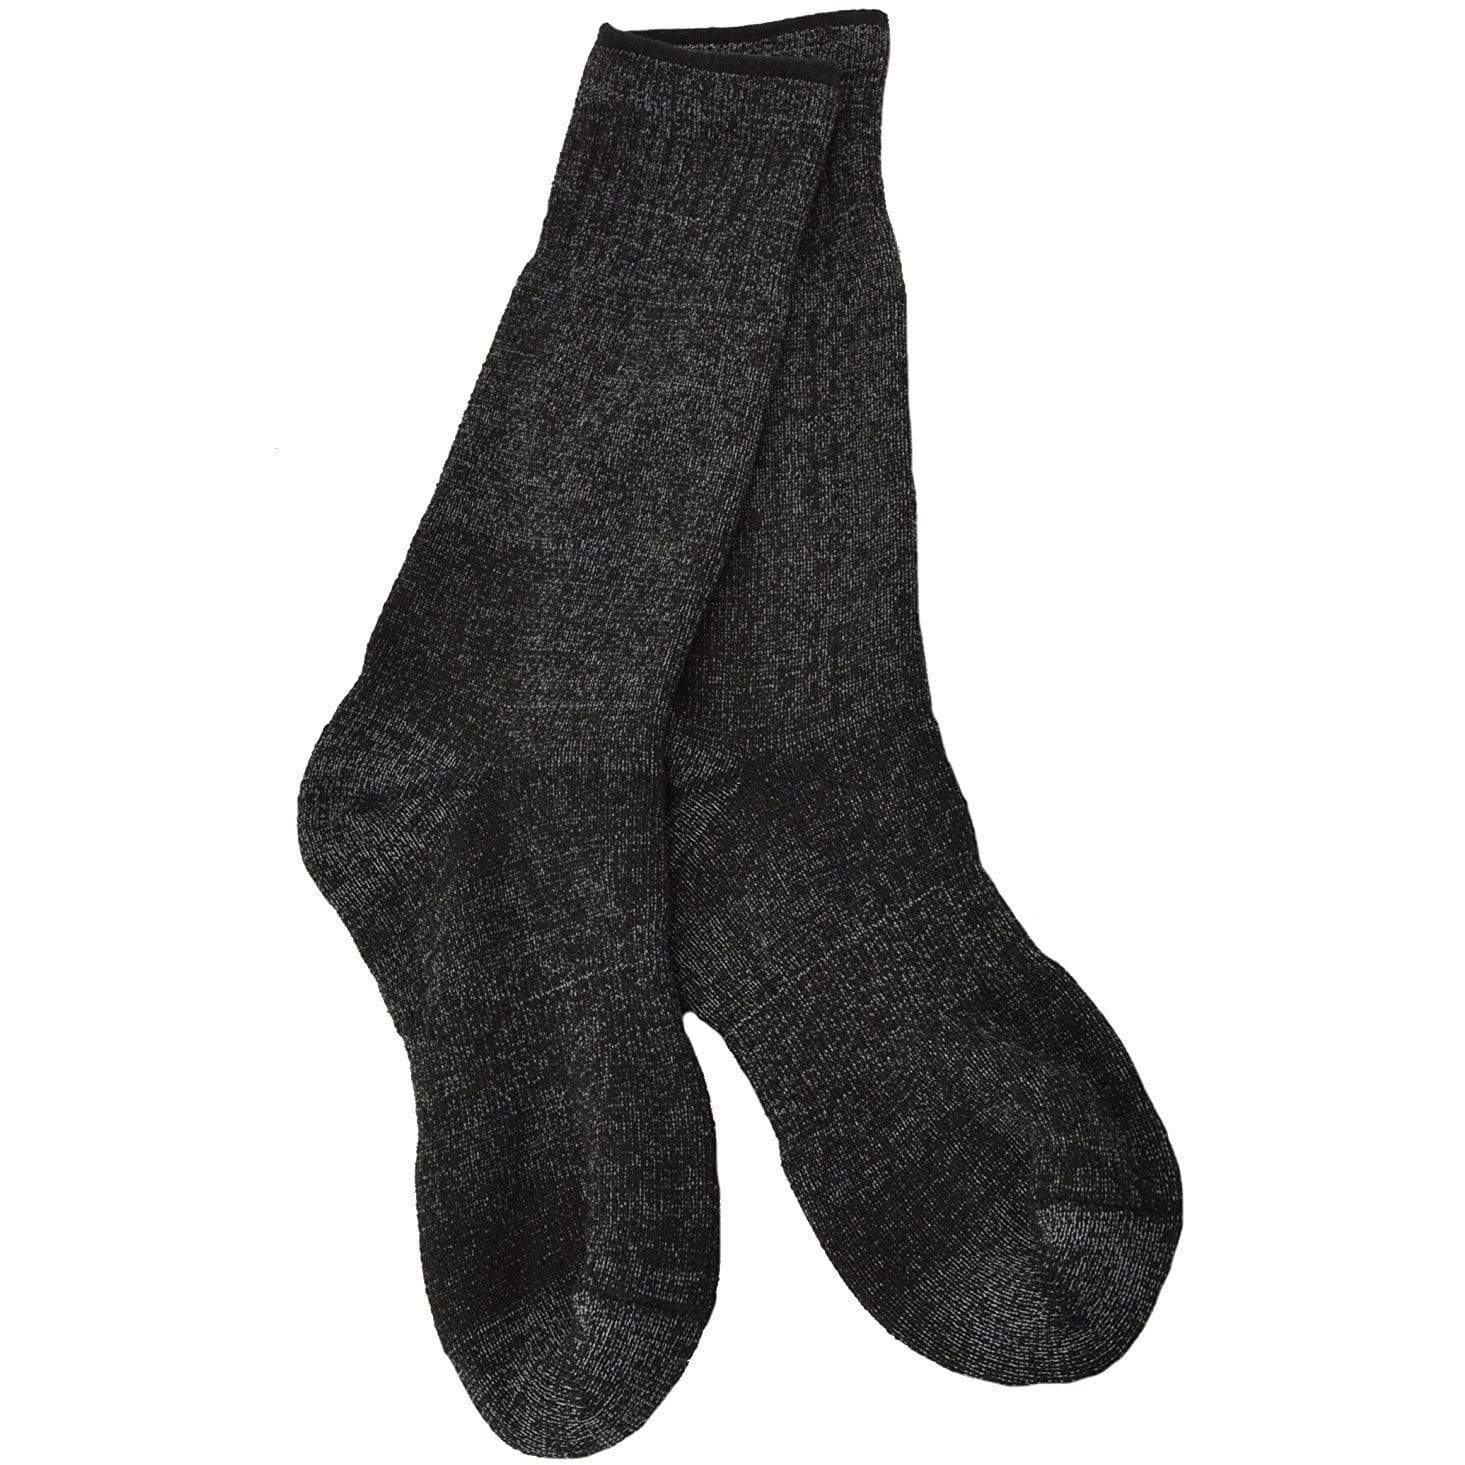 Sierra Socks Men Women Full Cushion 3 Pair Pack Hunting, Hiking and Work Socks M1818